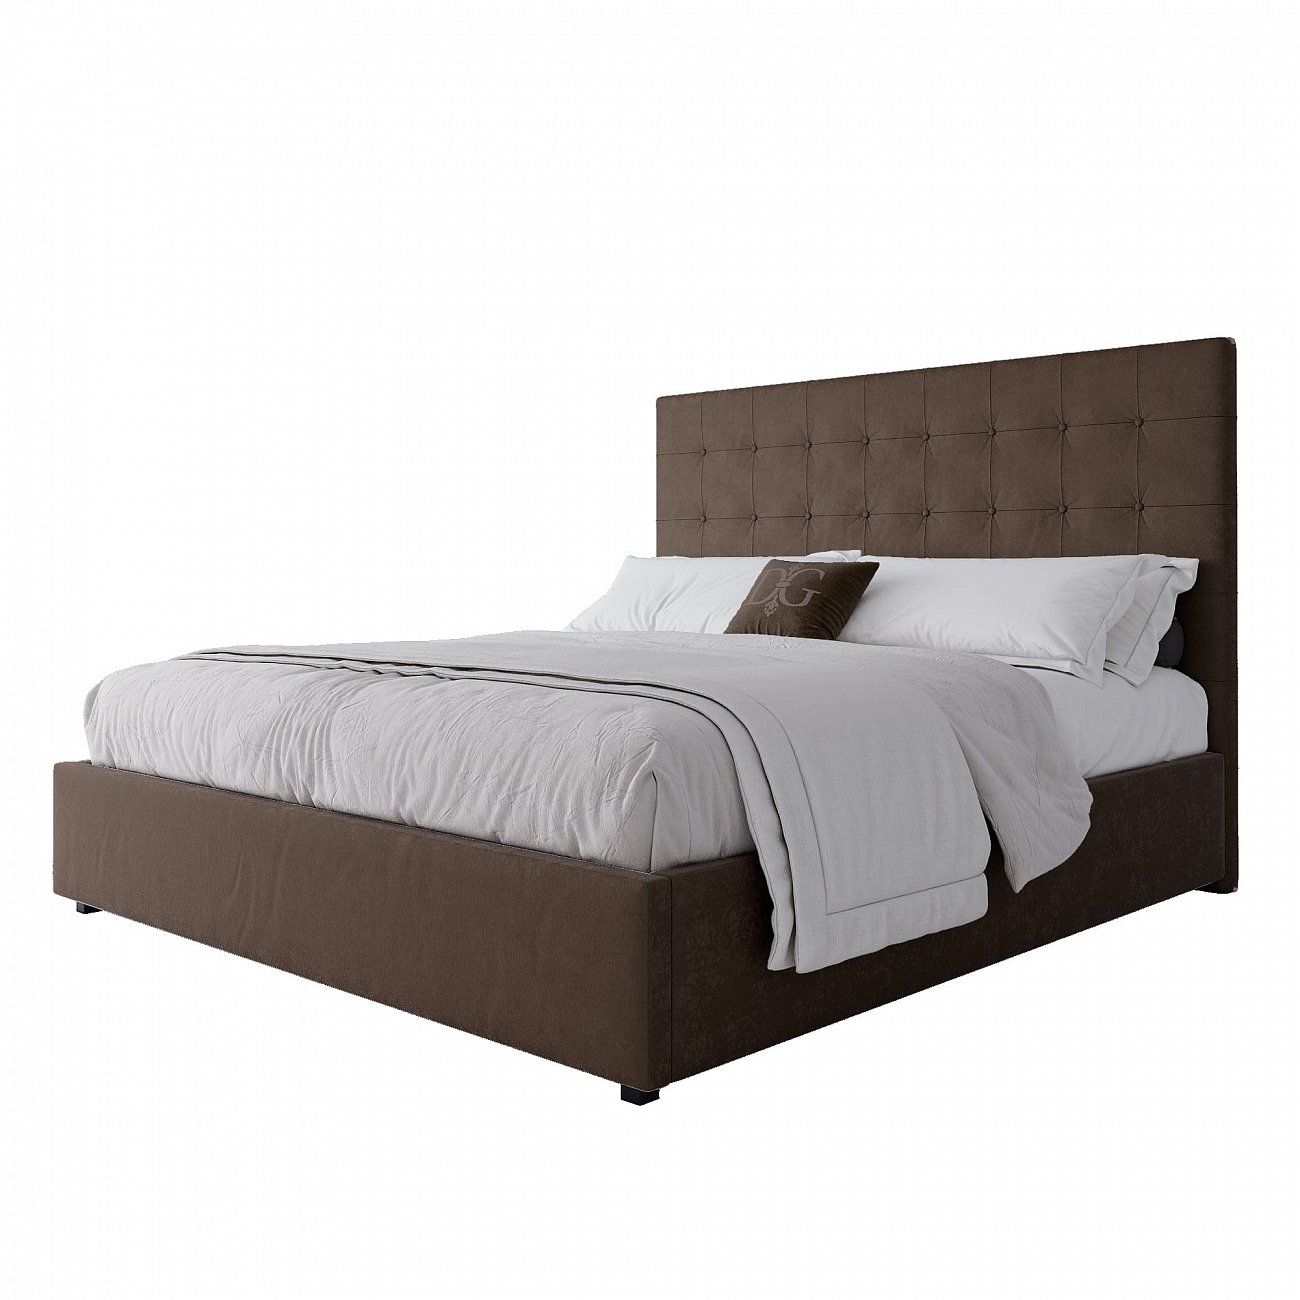 Double bed 180x200 dark brown Royal Black